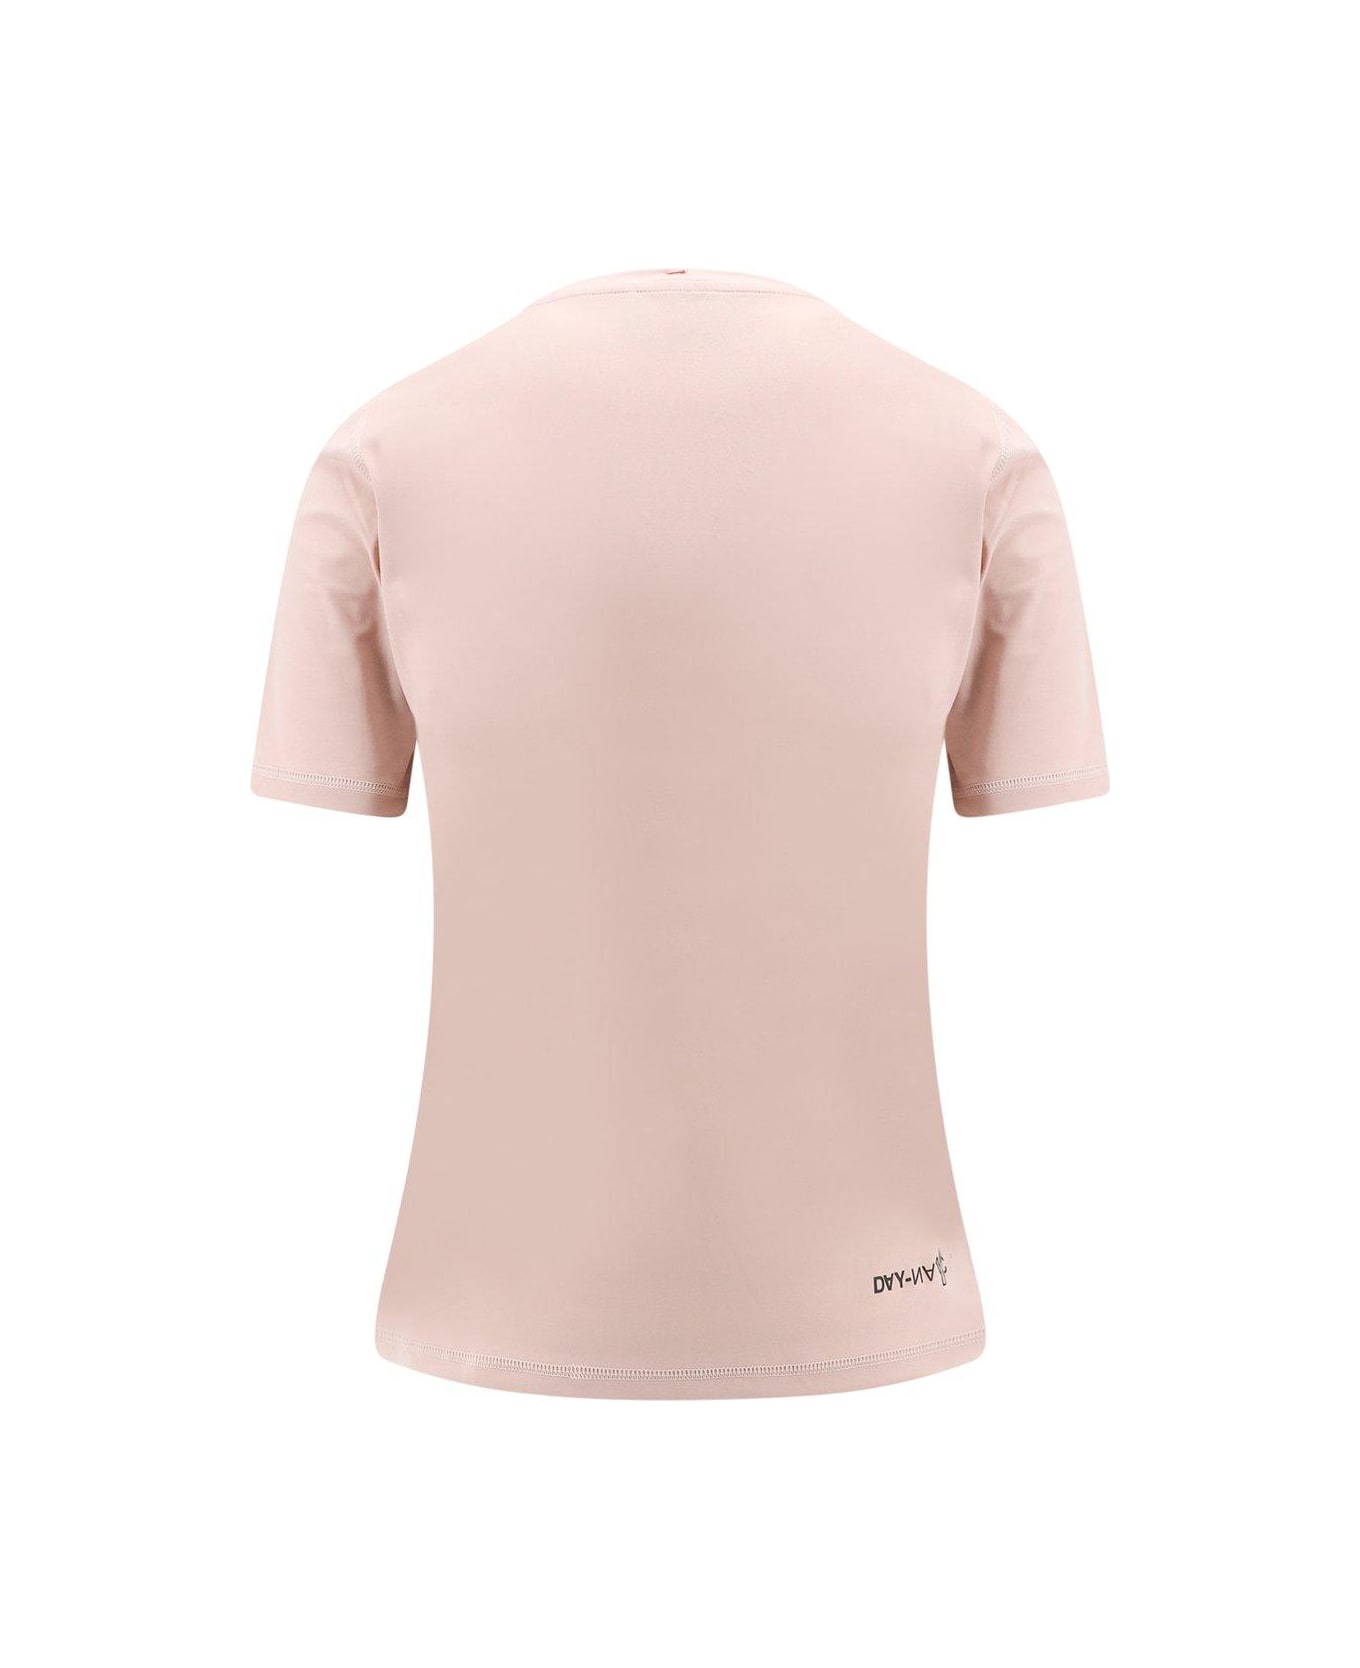 Moncler Grenoble Logo Patch Crewneck T-shirt - Lighrt pink